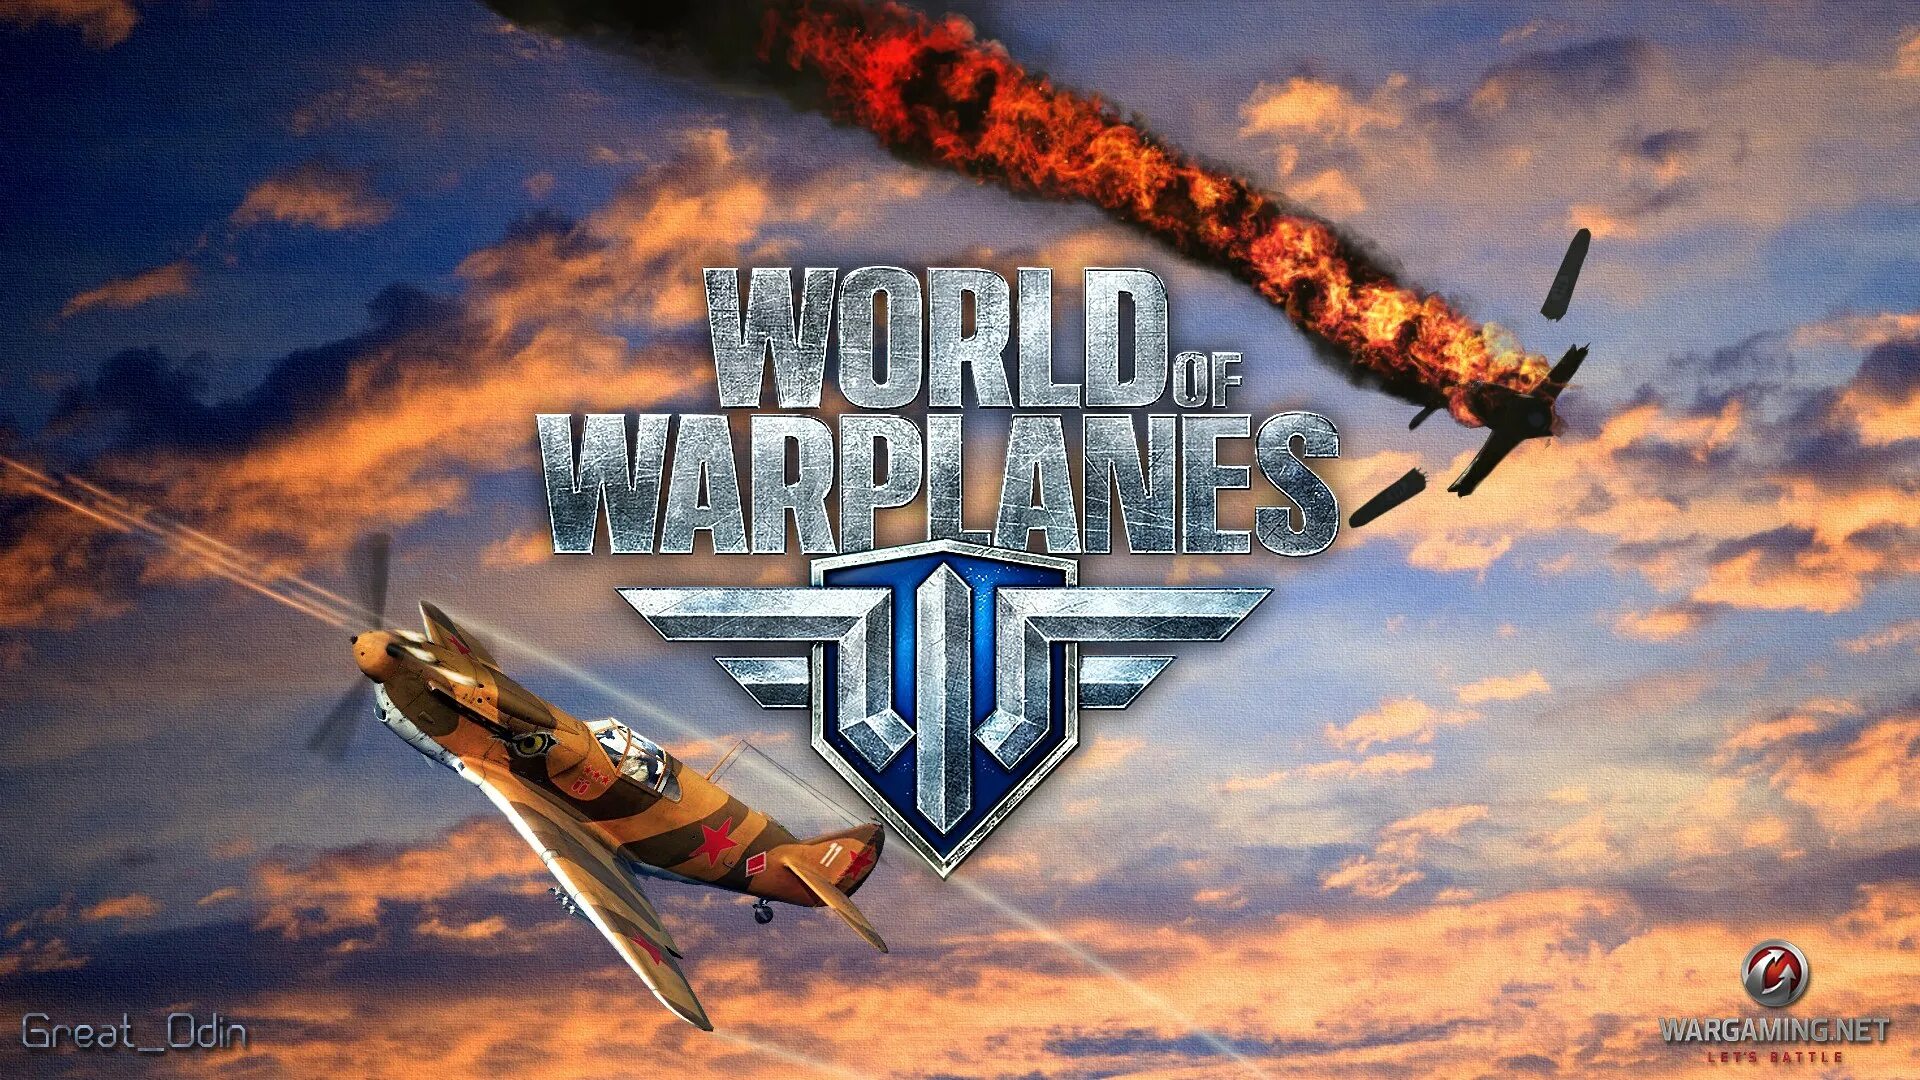 World of warplanes. World of warplanes logo. World of warplanes ярлык. World of warplanes логотип без фона.